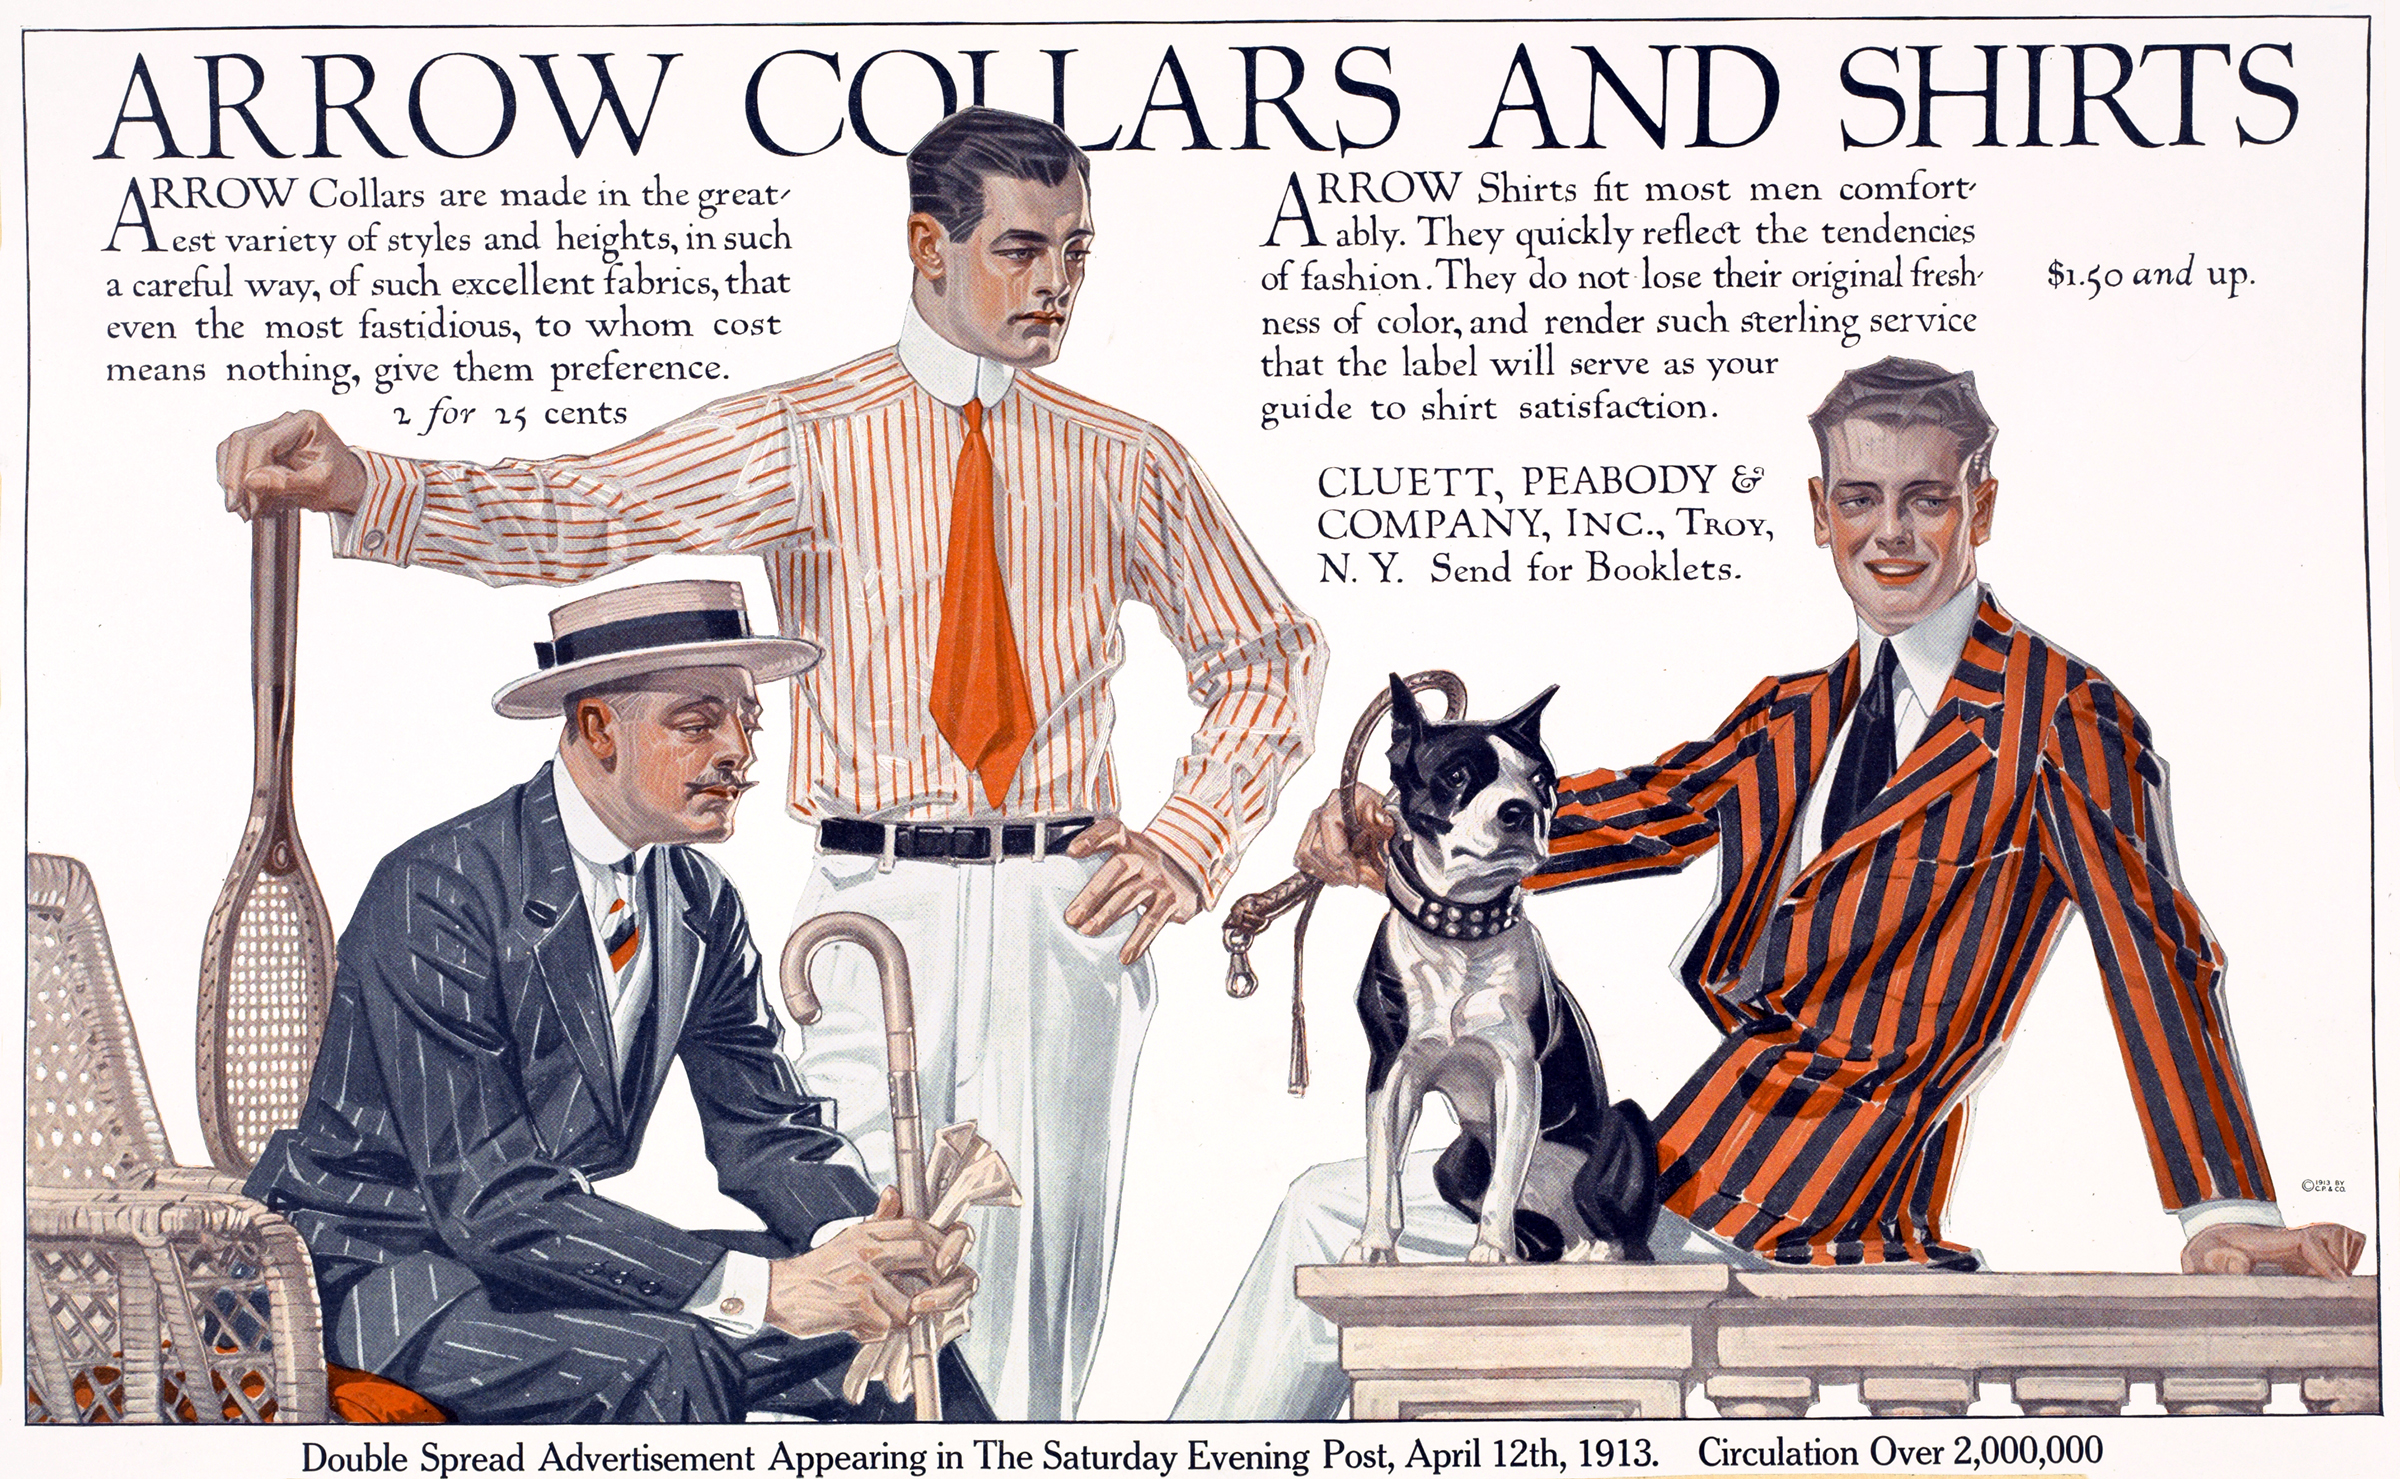 LEYENDECKER, J. C. Arrow collars & shirts. Saturday Evening Post, April 12, 1913.